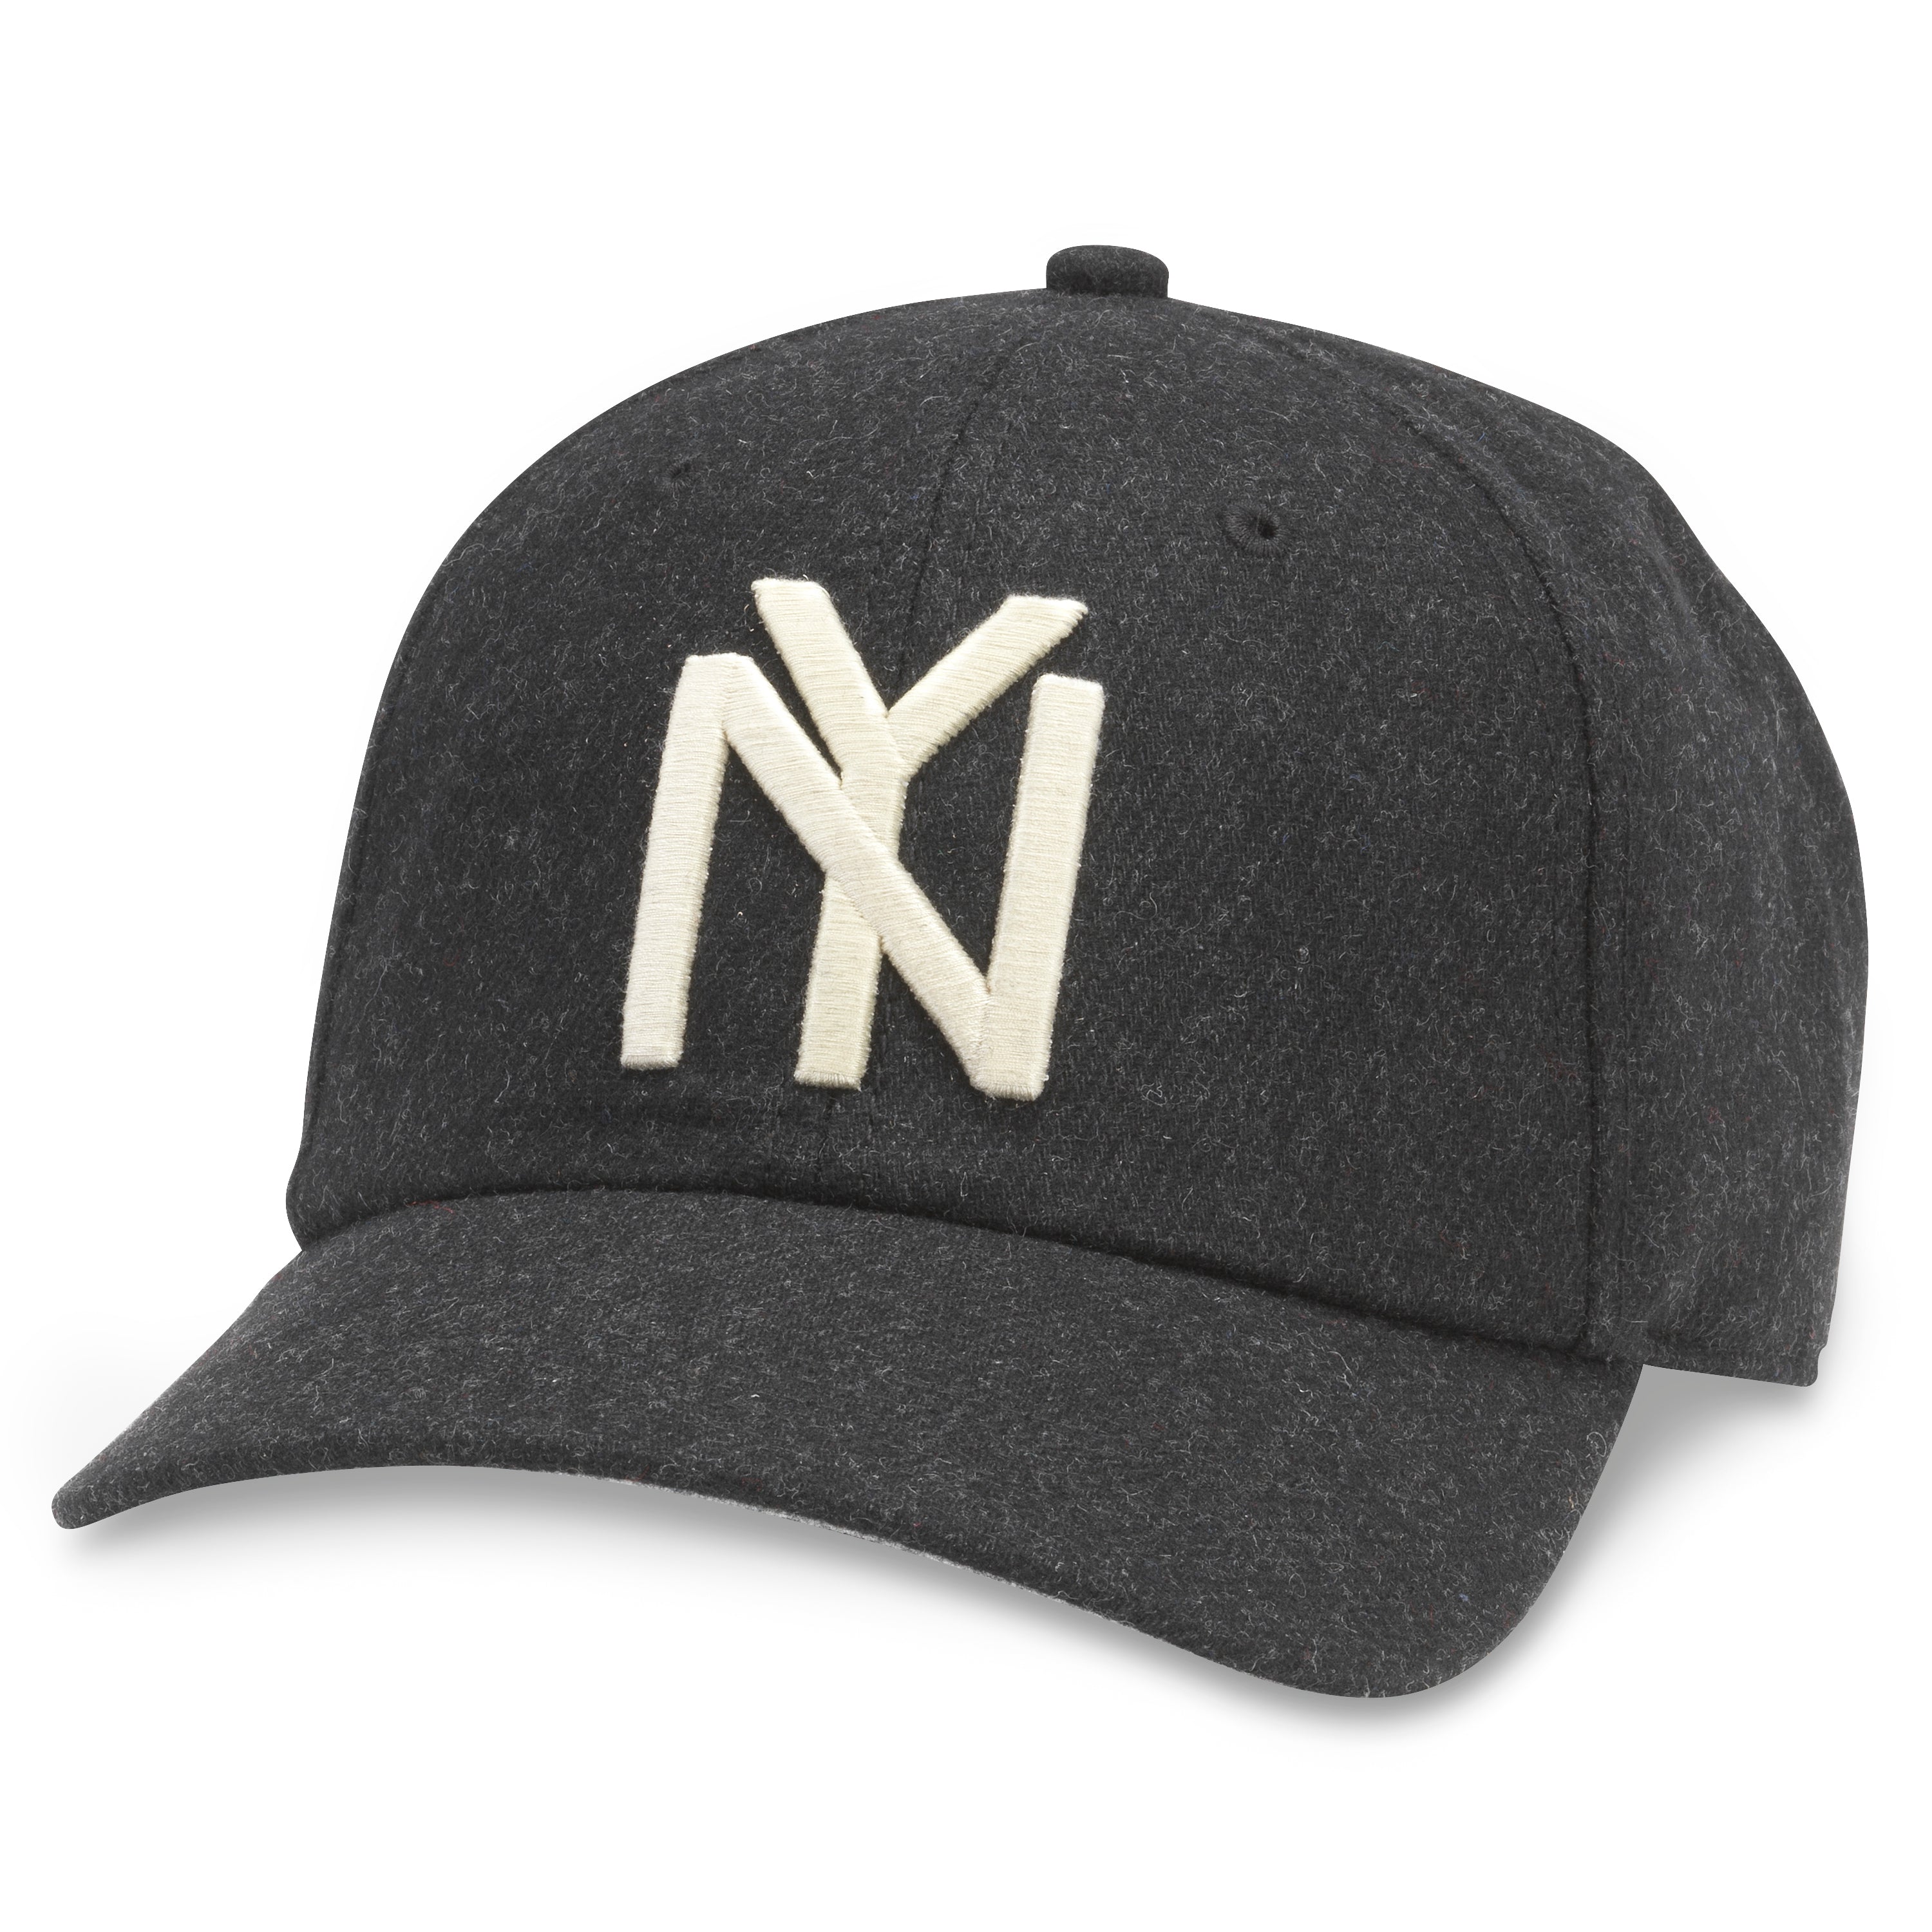 47 Brand Men's New York Yankees Americana Star T-Shirt - Blue S